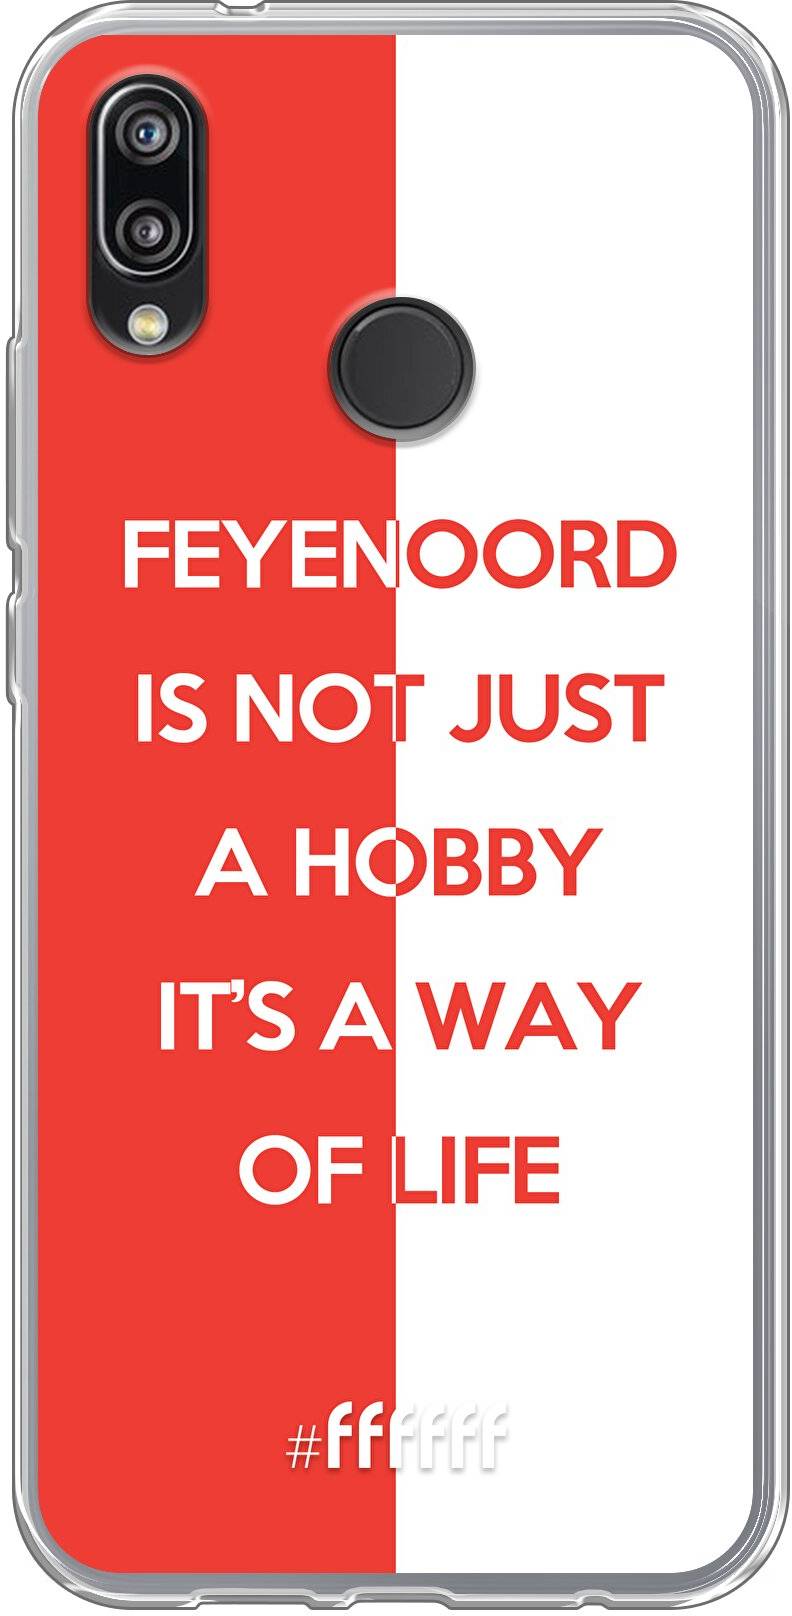 Feyenoord - Way of life P20 Lite (2018)